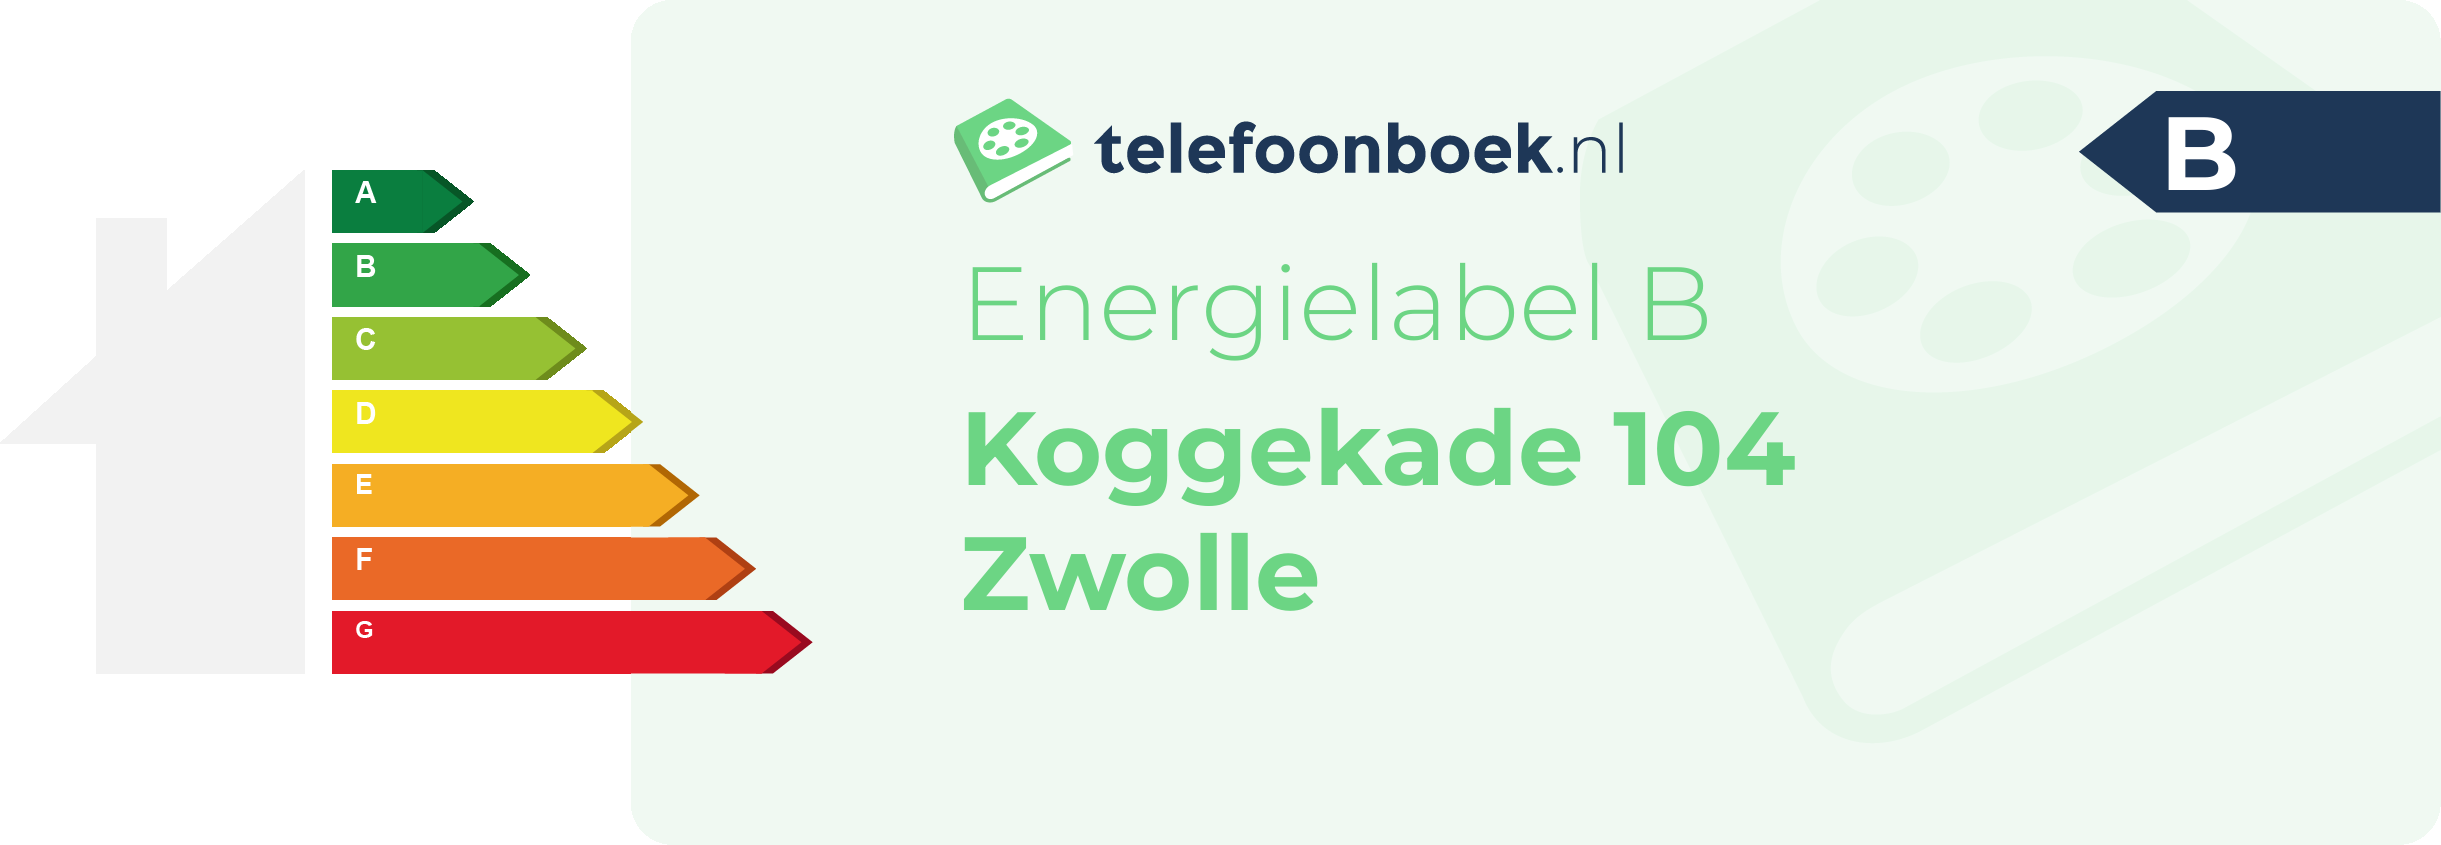 Energielabel Koggekade 104 Zwolle